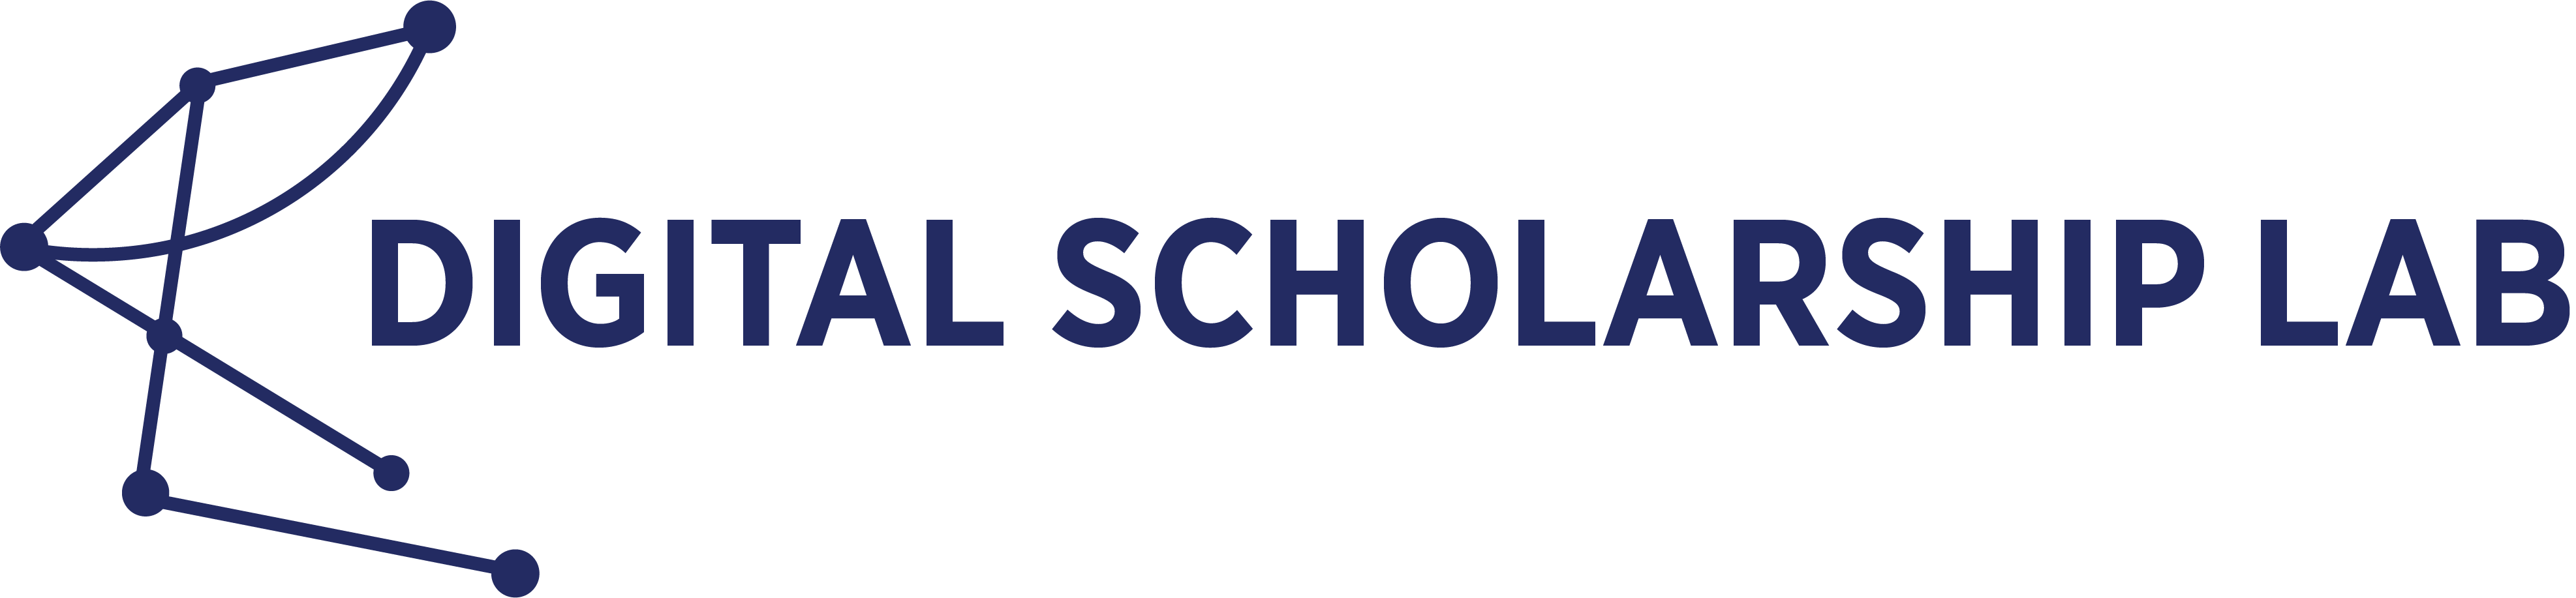 Digital Scholarship Lab Wordmark